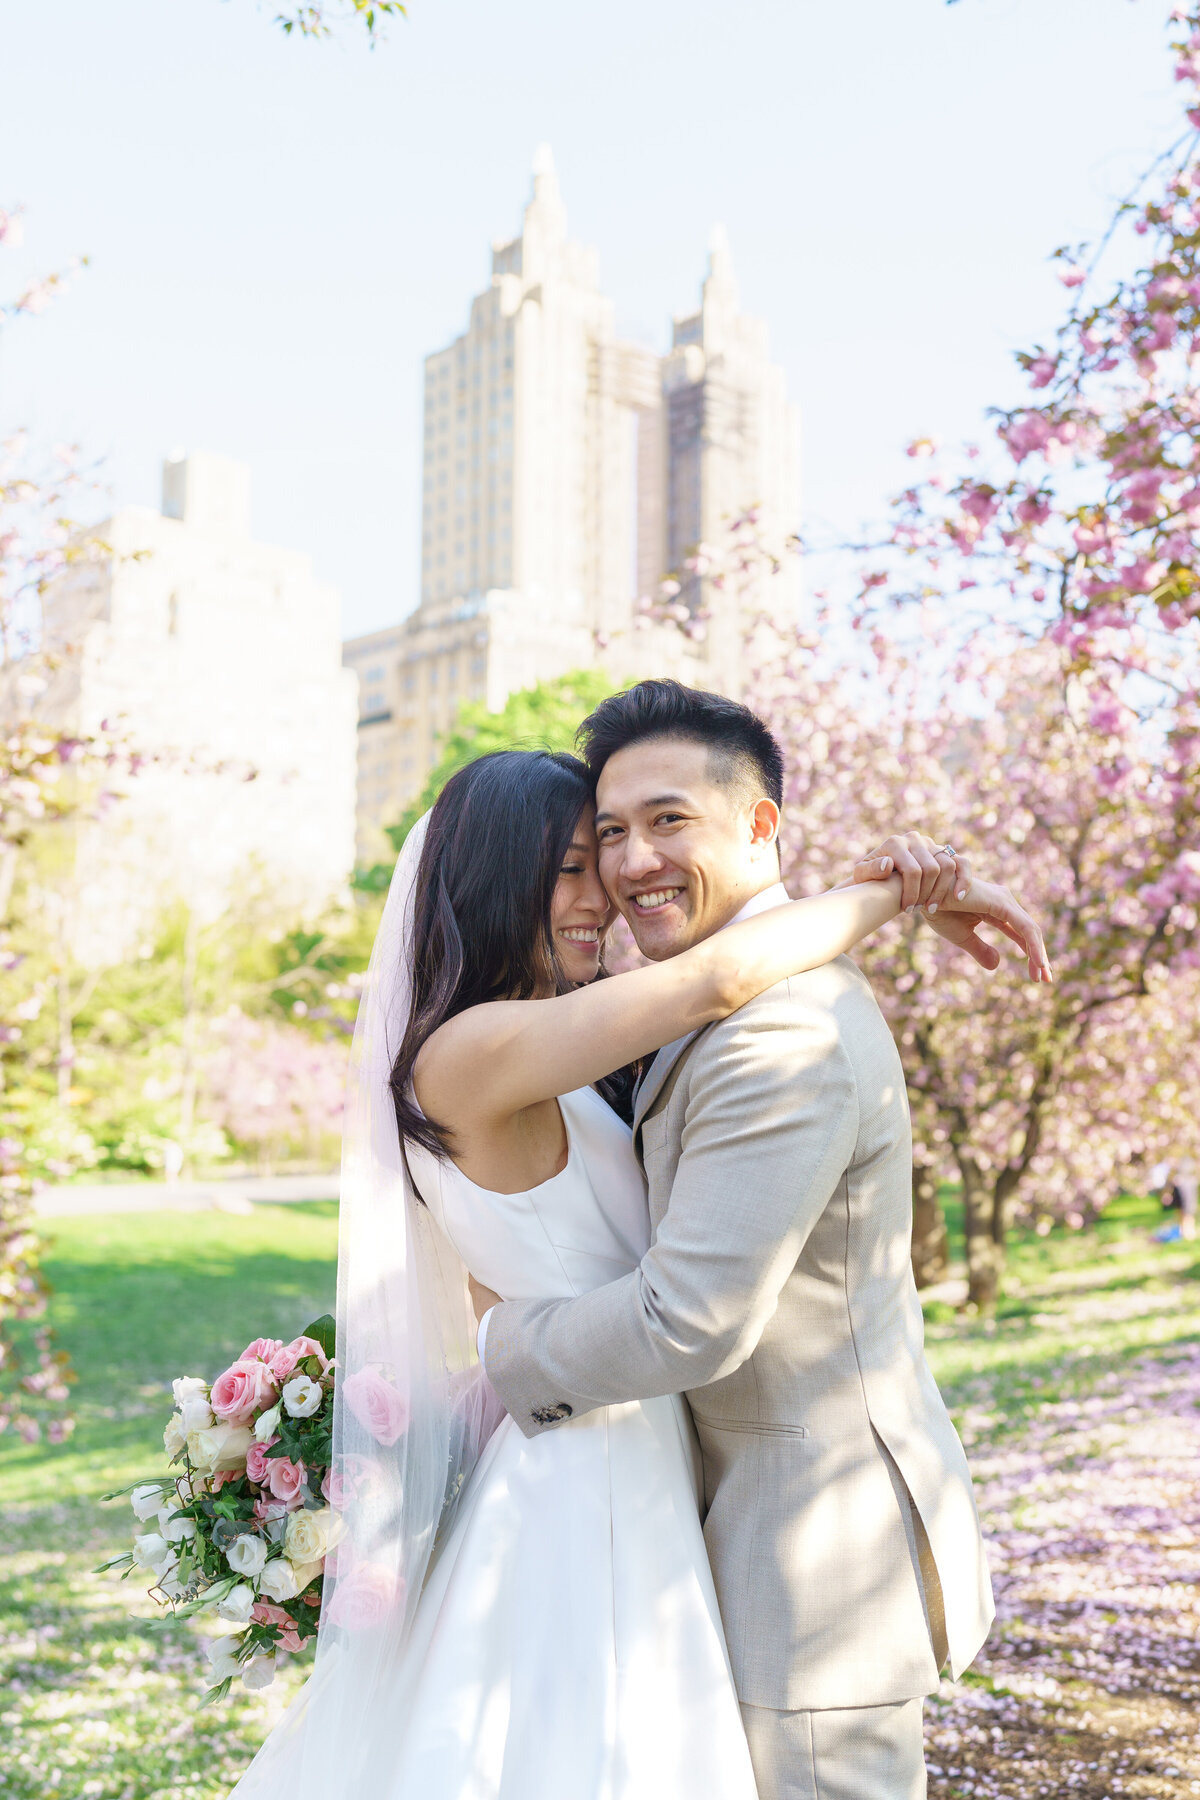 Amanda Gomez Photography - Central Park Wedding Photographer - 3